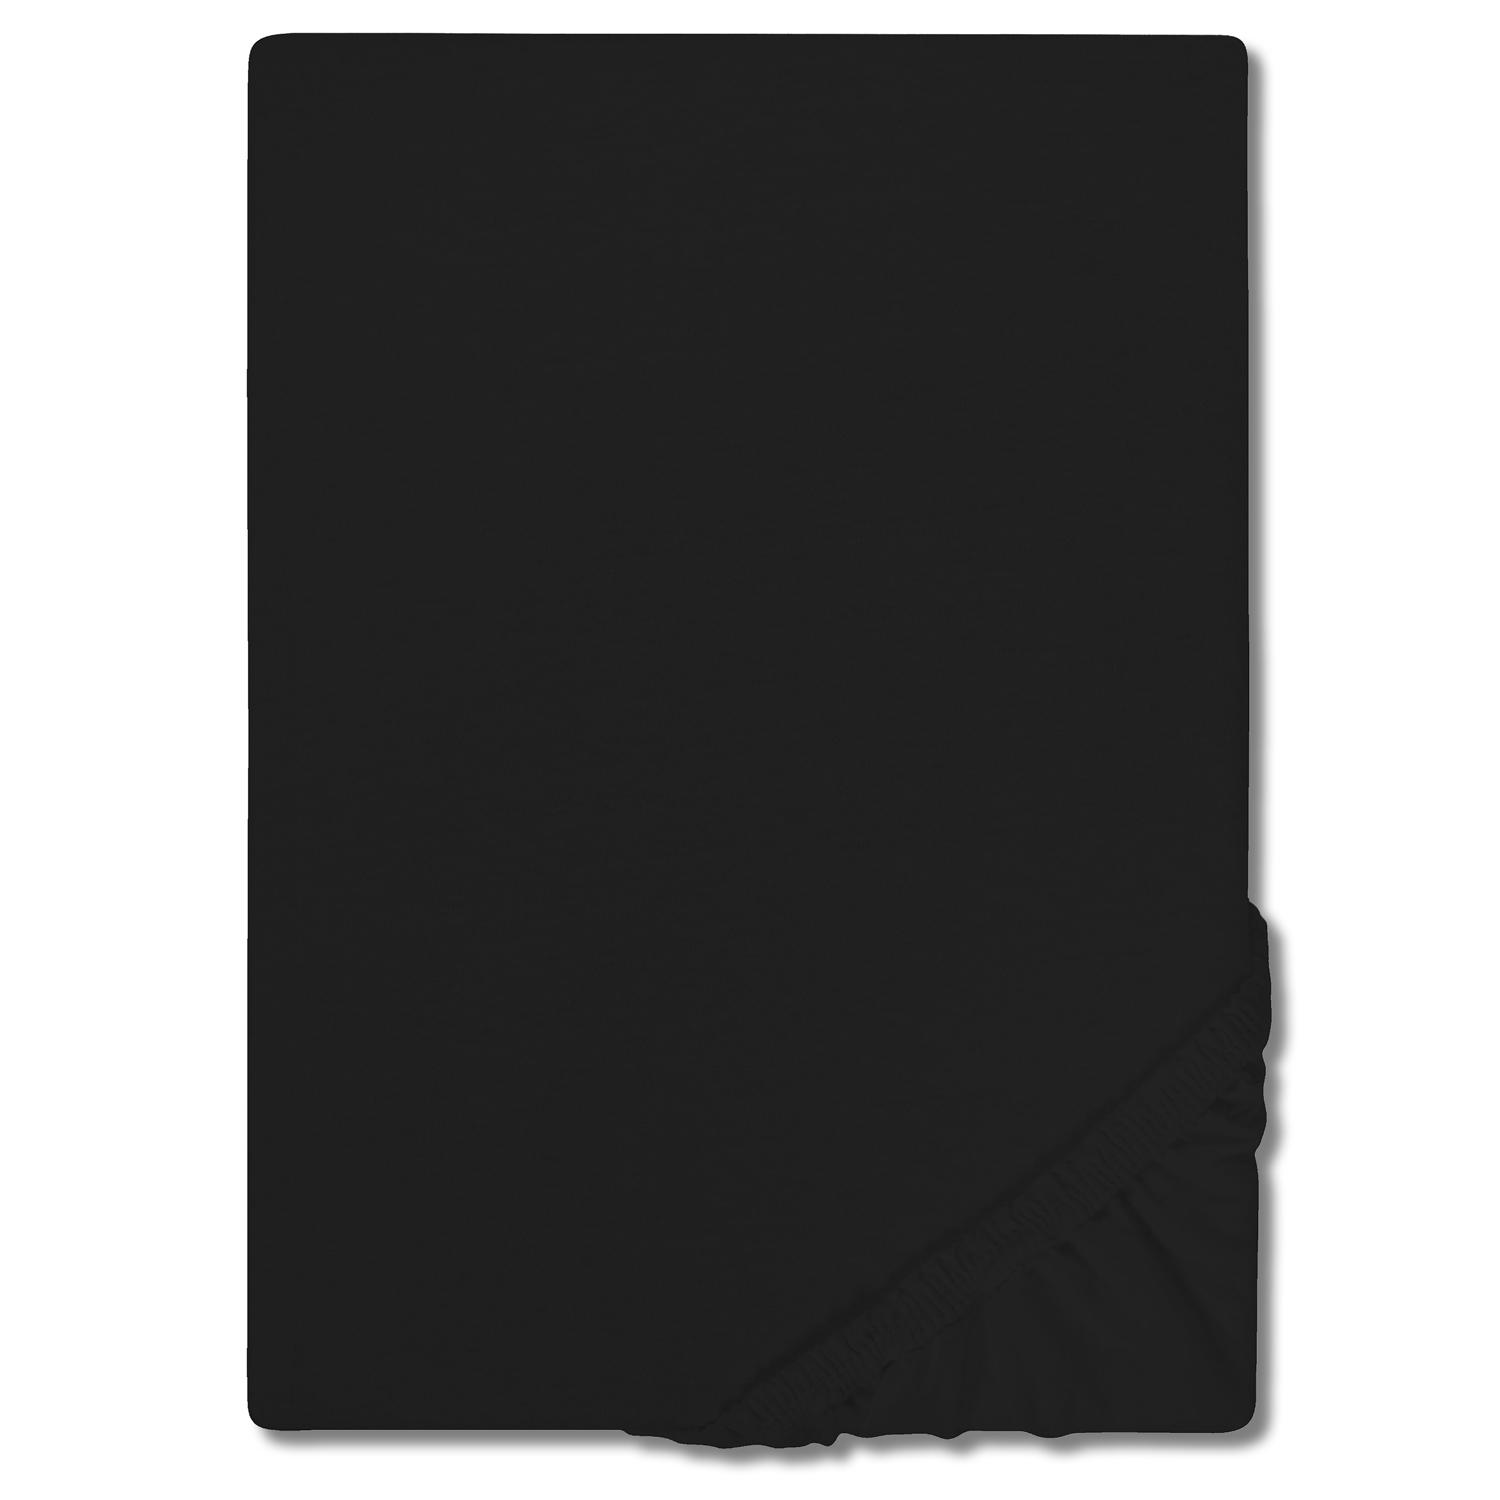 CloudComfort Basic cearșaf ajustabil jersey stretch negru 180 x 190 - 200 x 200 cm